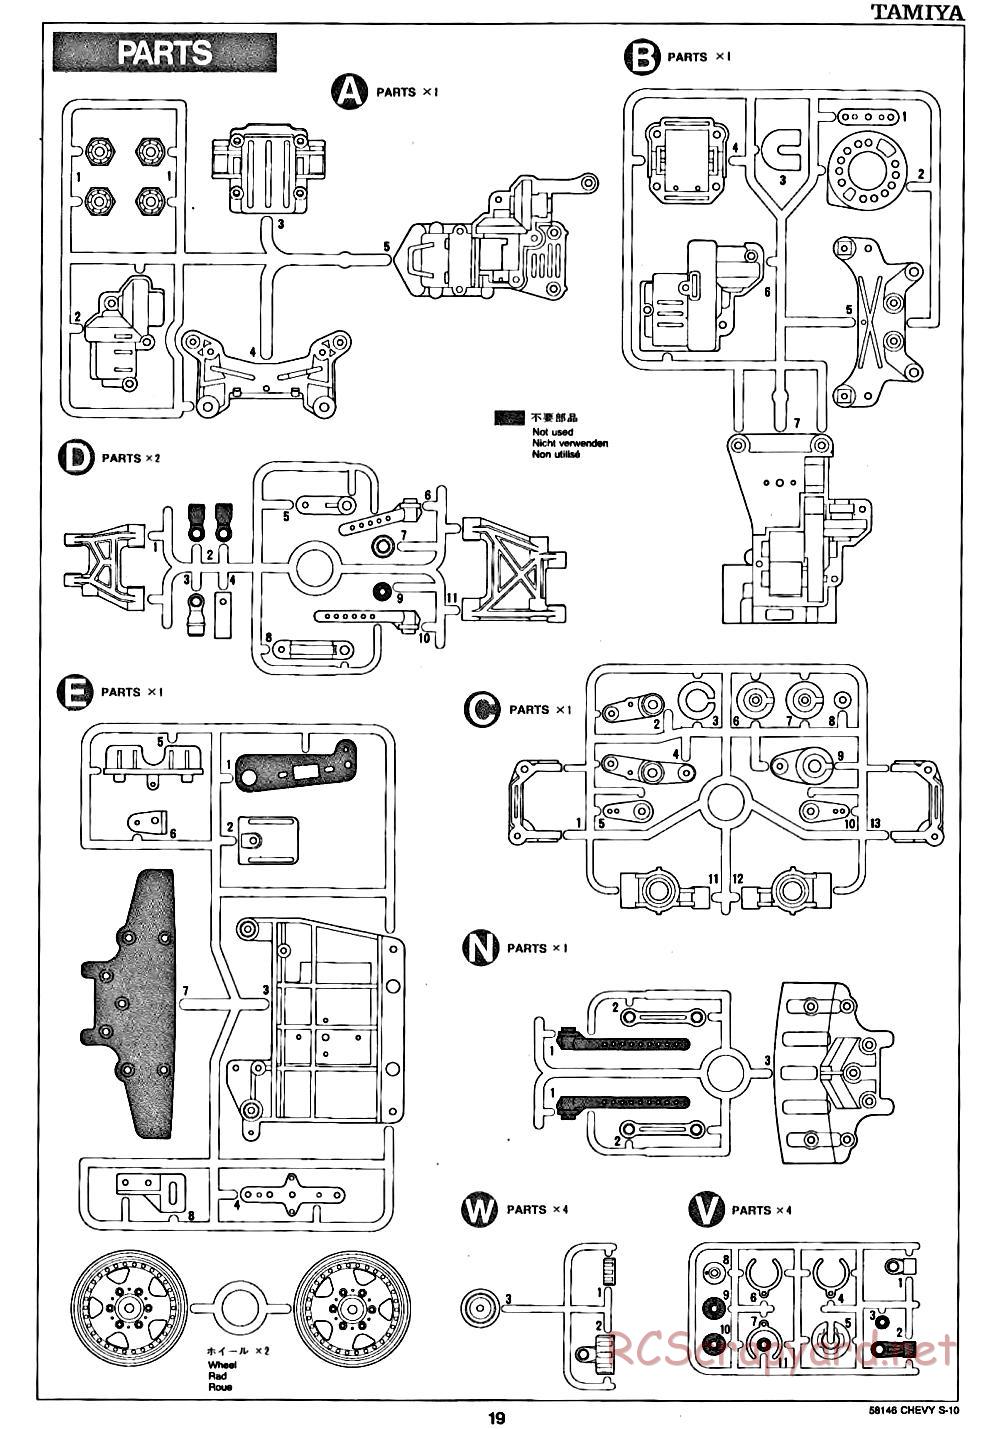 Tamiya - Chevy S-10 Chassis - Manual - Page 19